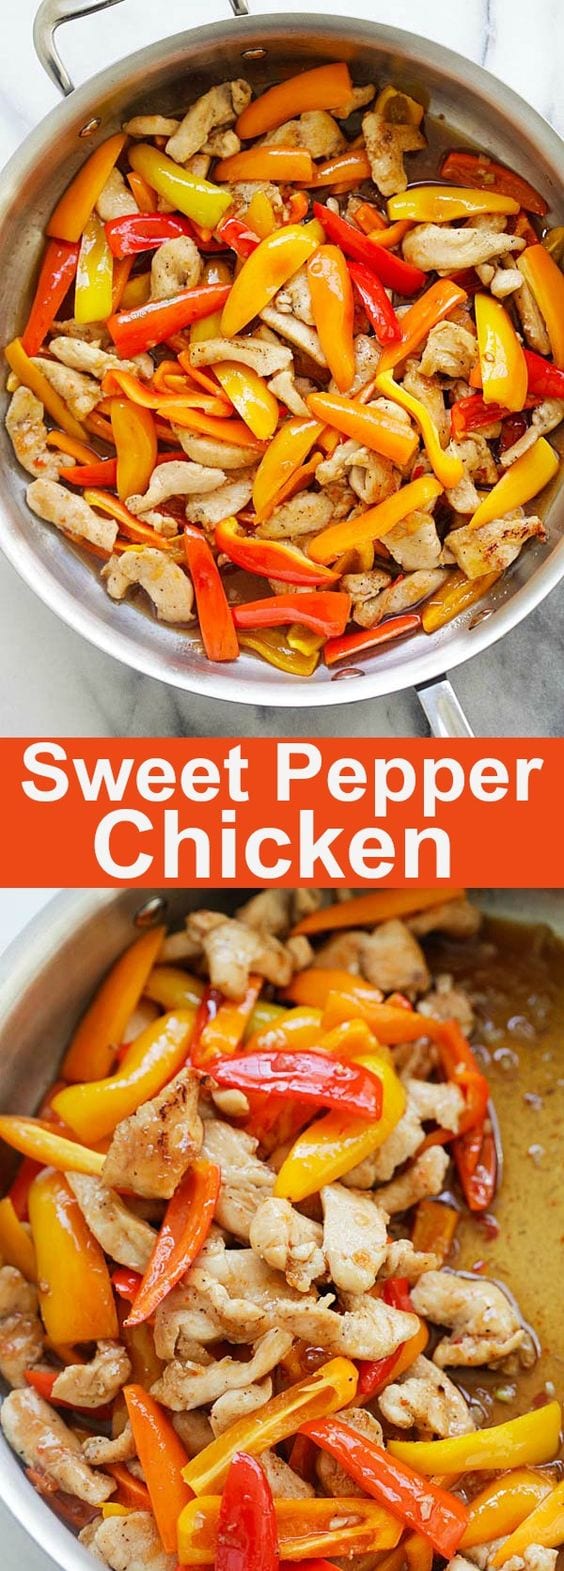 Sweet Pepper Chicken Rasa Malaysia